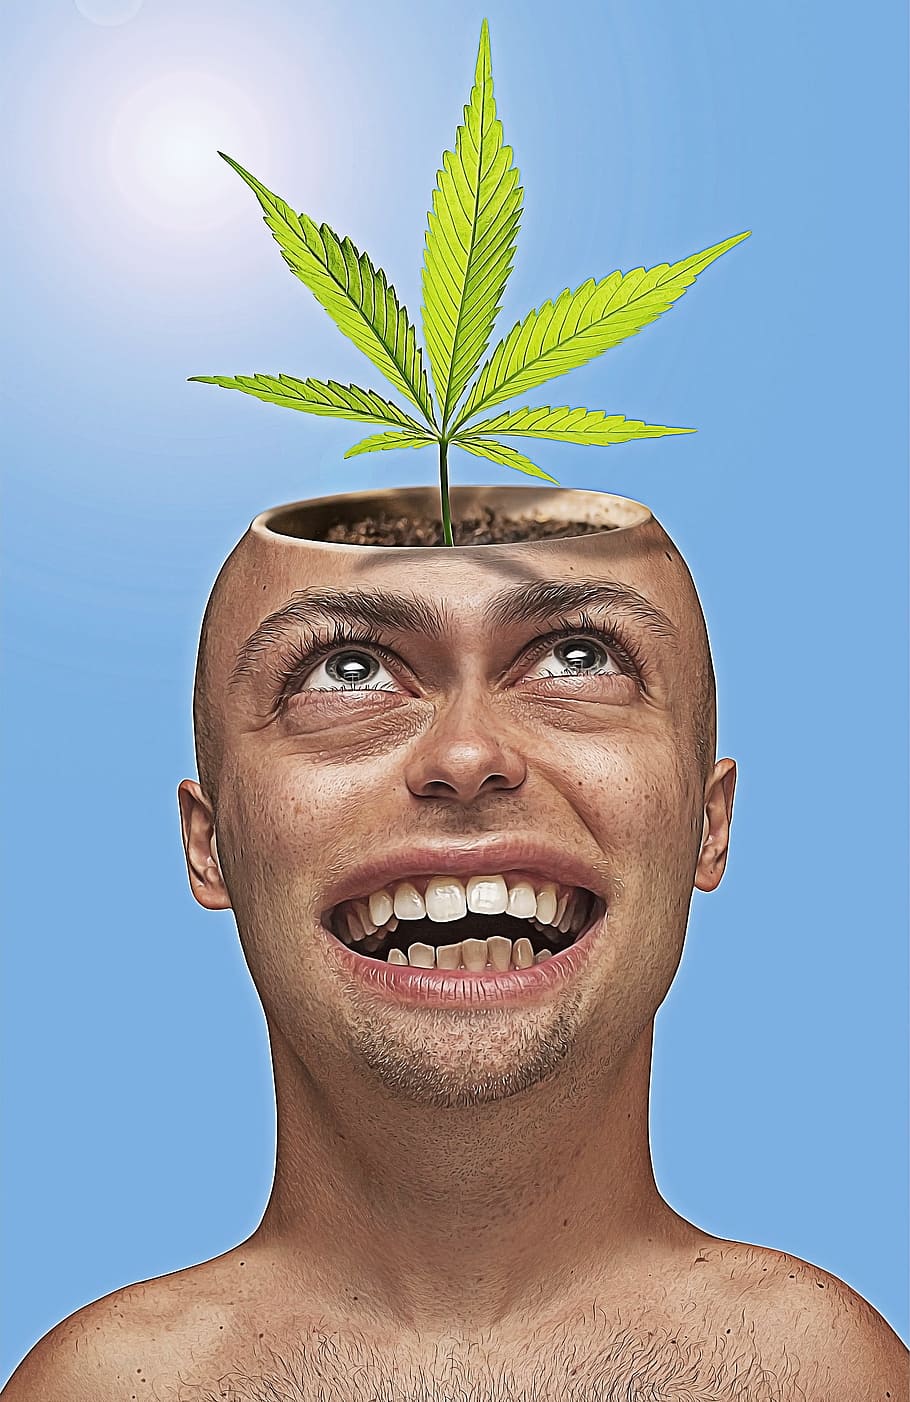 HD wallpaper: green cannabis plant on man's head, caricature, cartoon,  funny | Wallpaper Flare